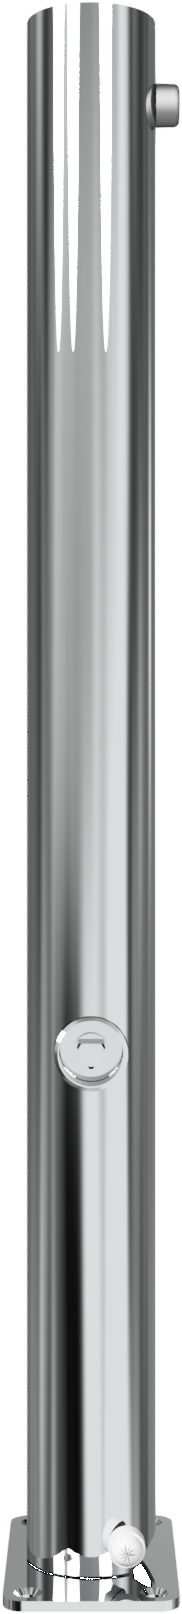 Absperrpfosten 'Bollard' Ø 76 mm, umlegbar